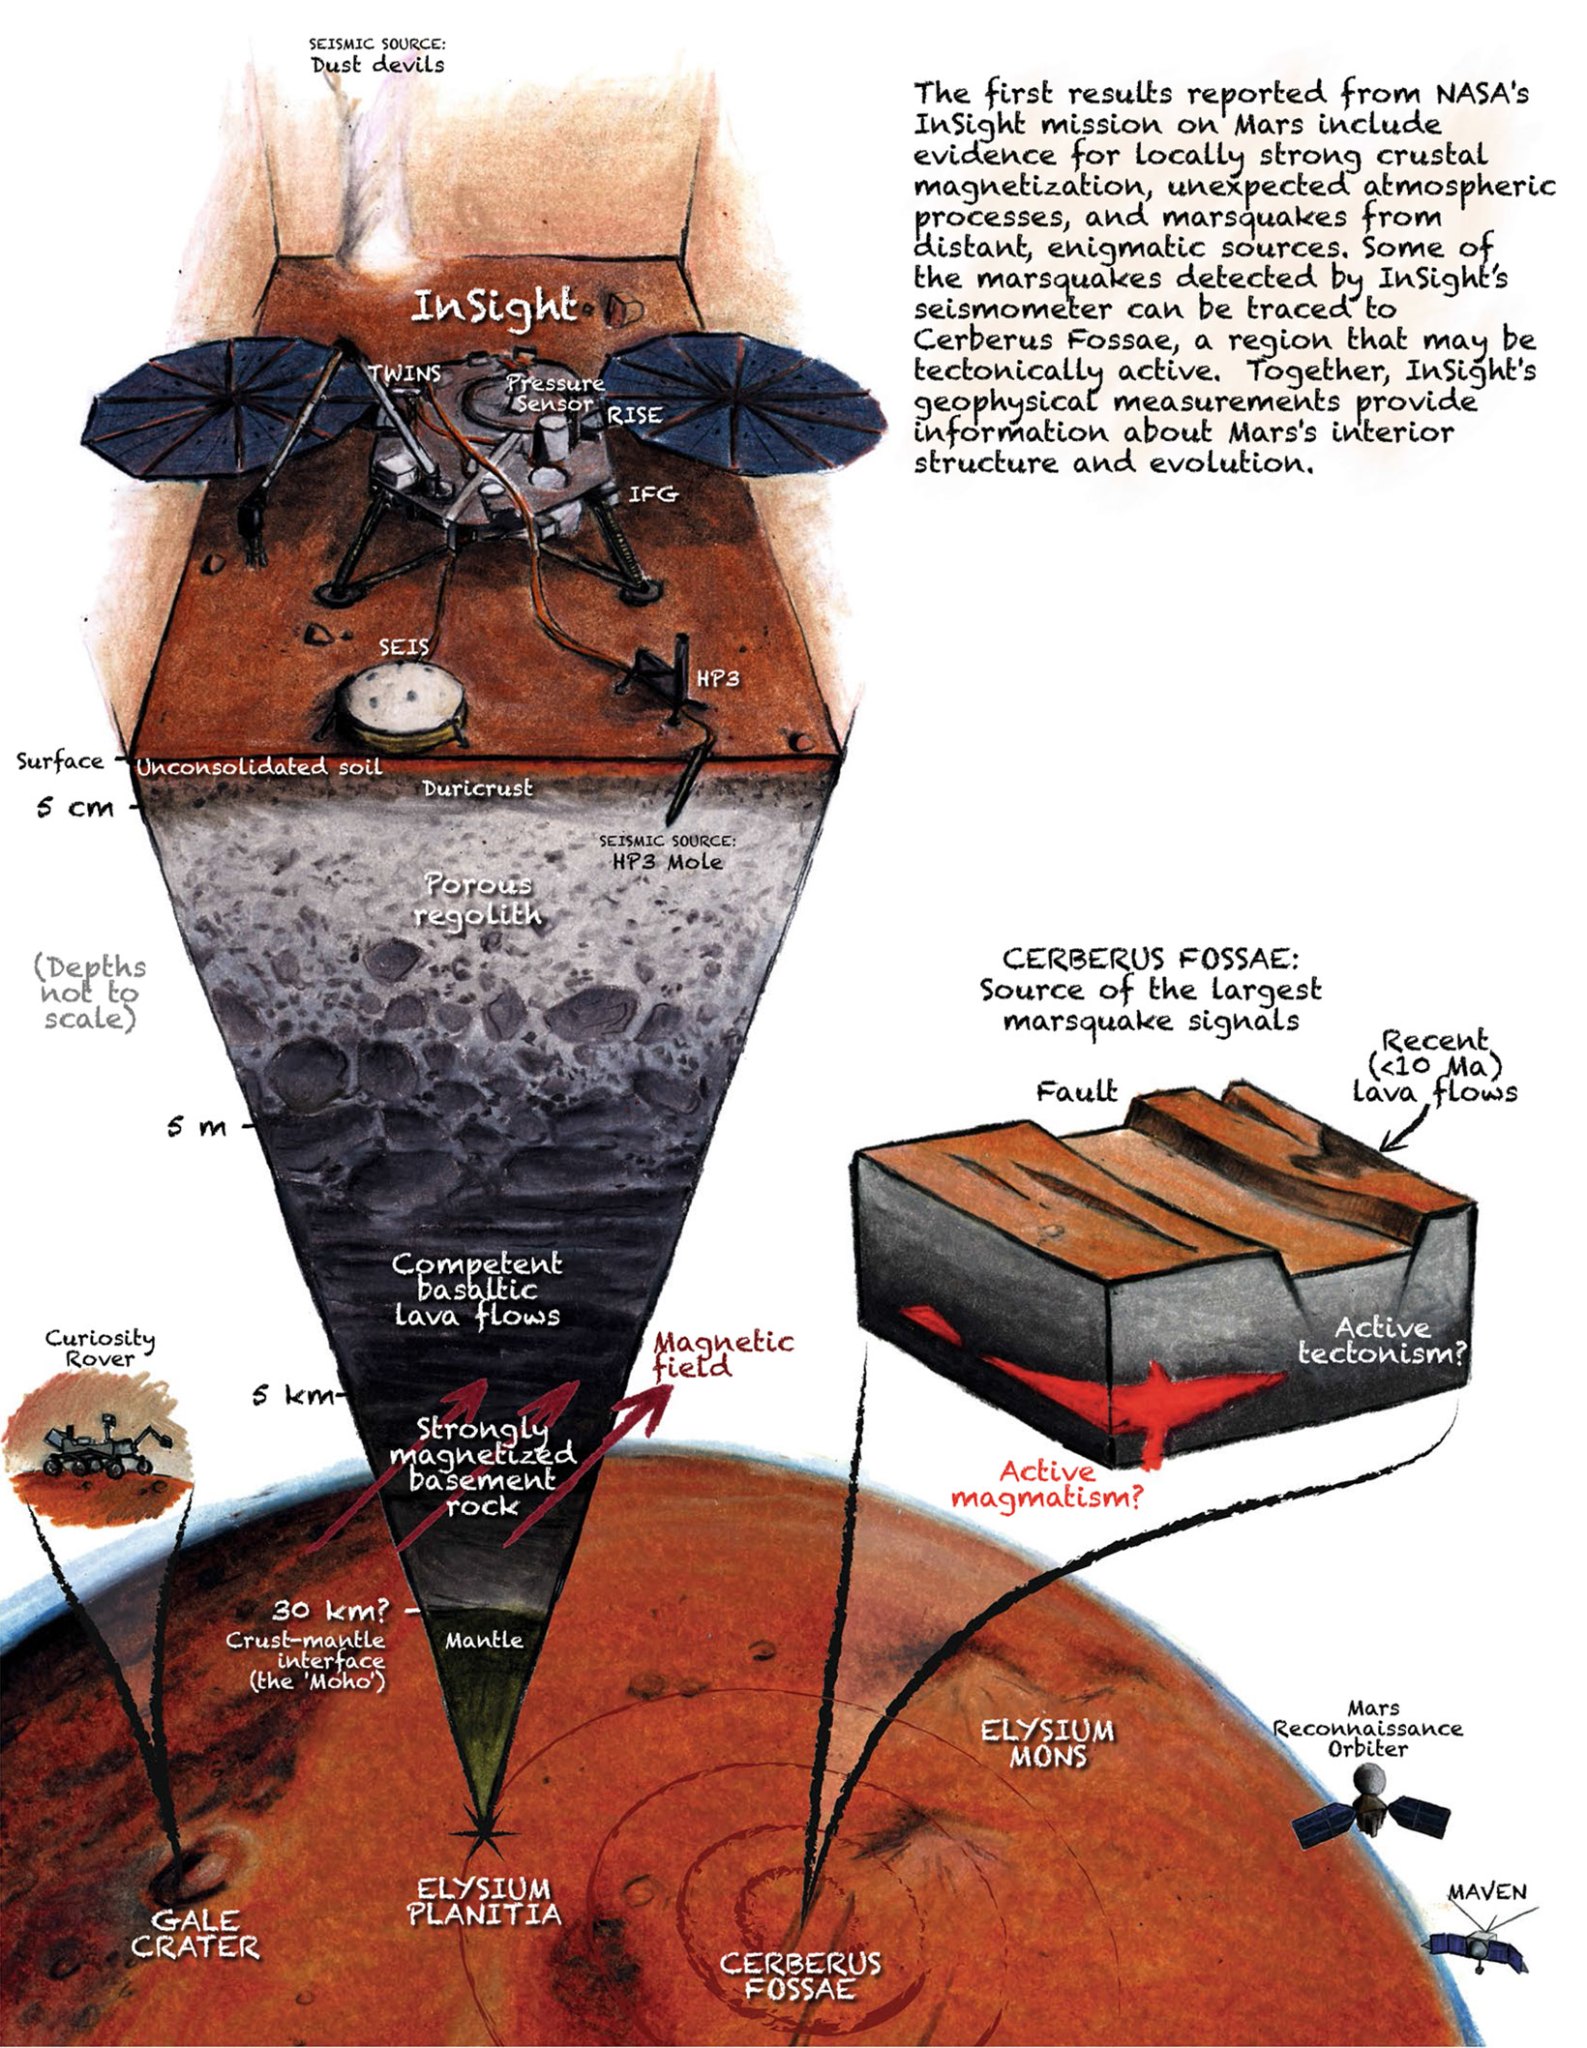 A cutaway view of Mars 